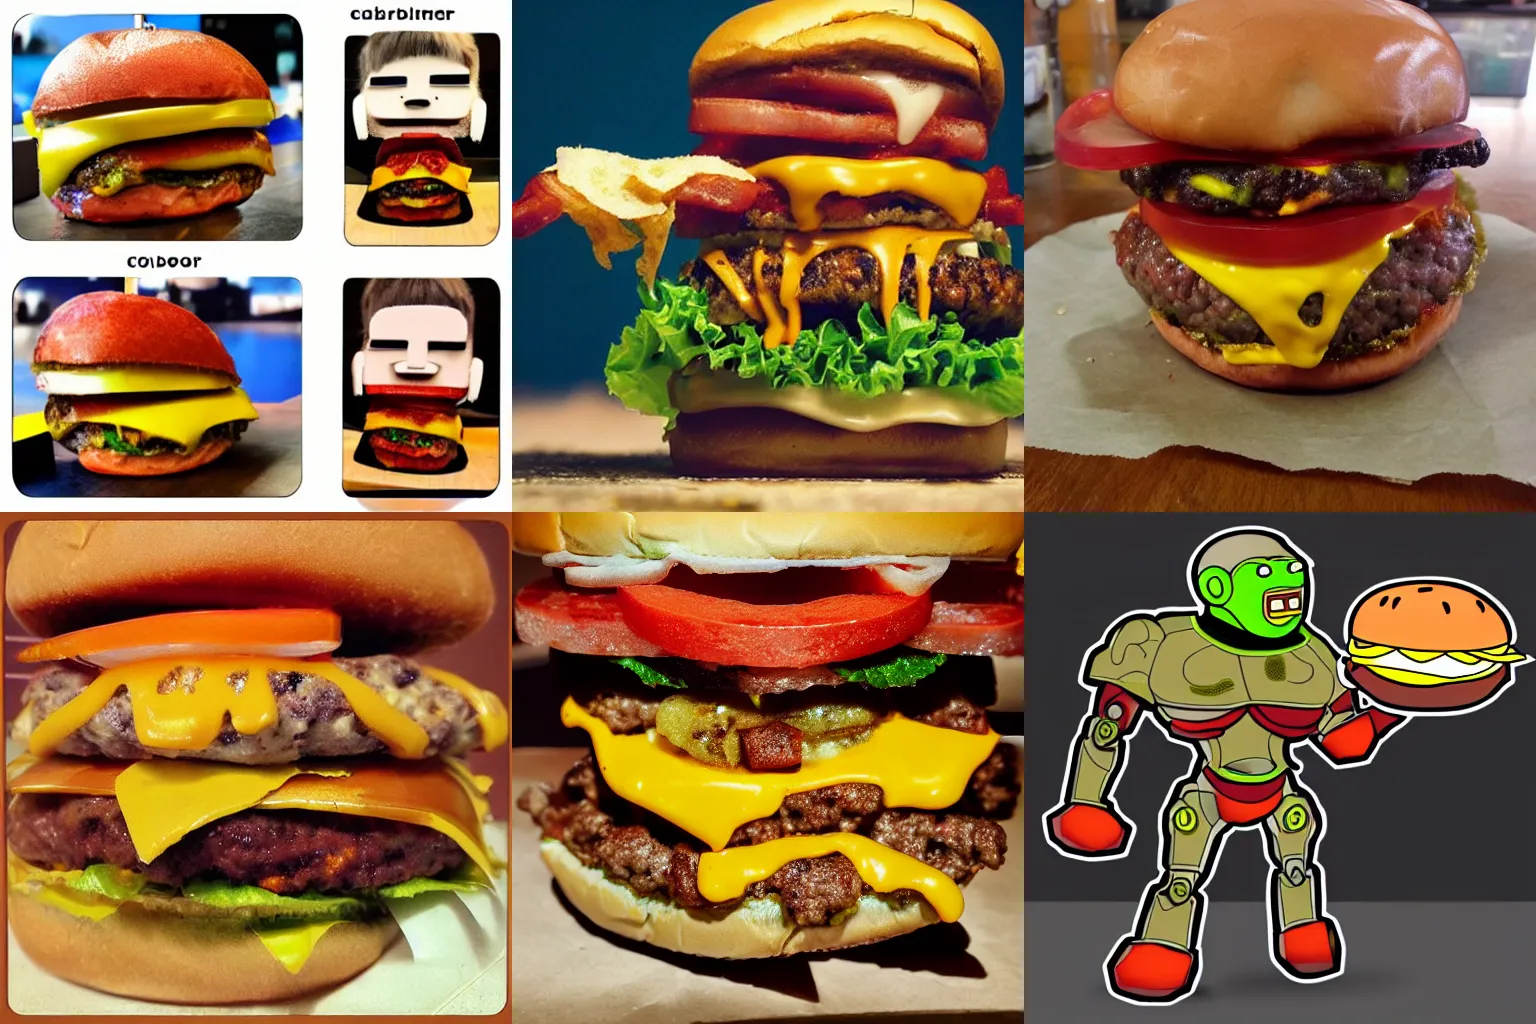 Prompt: cyborg cheeseburger